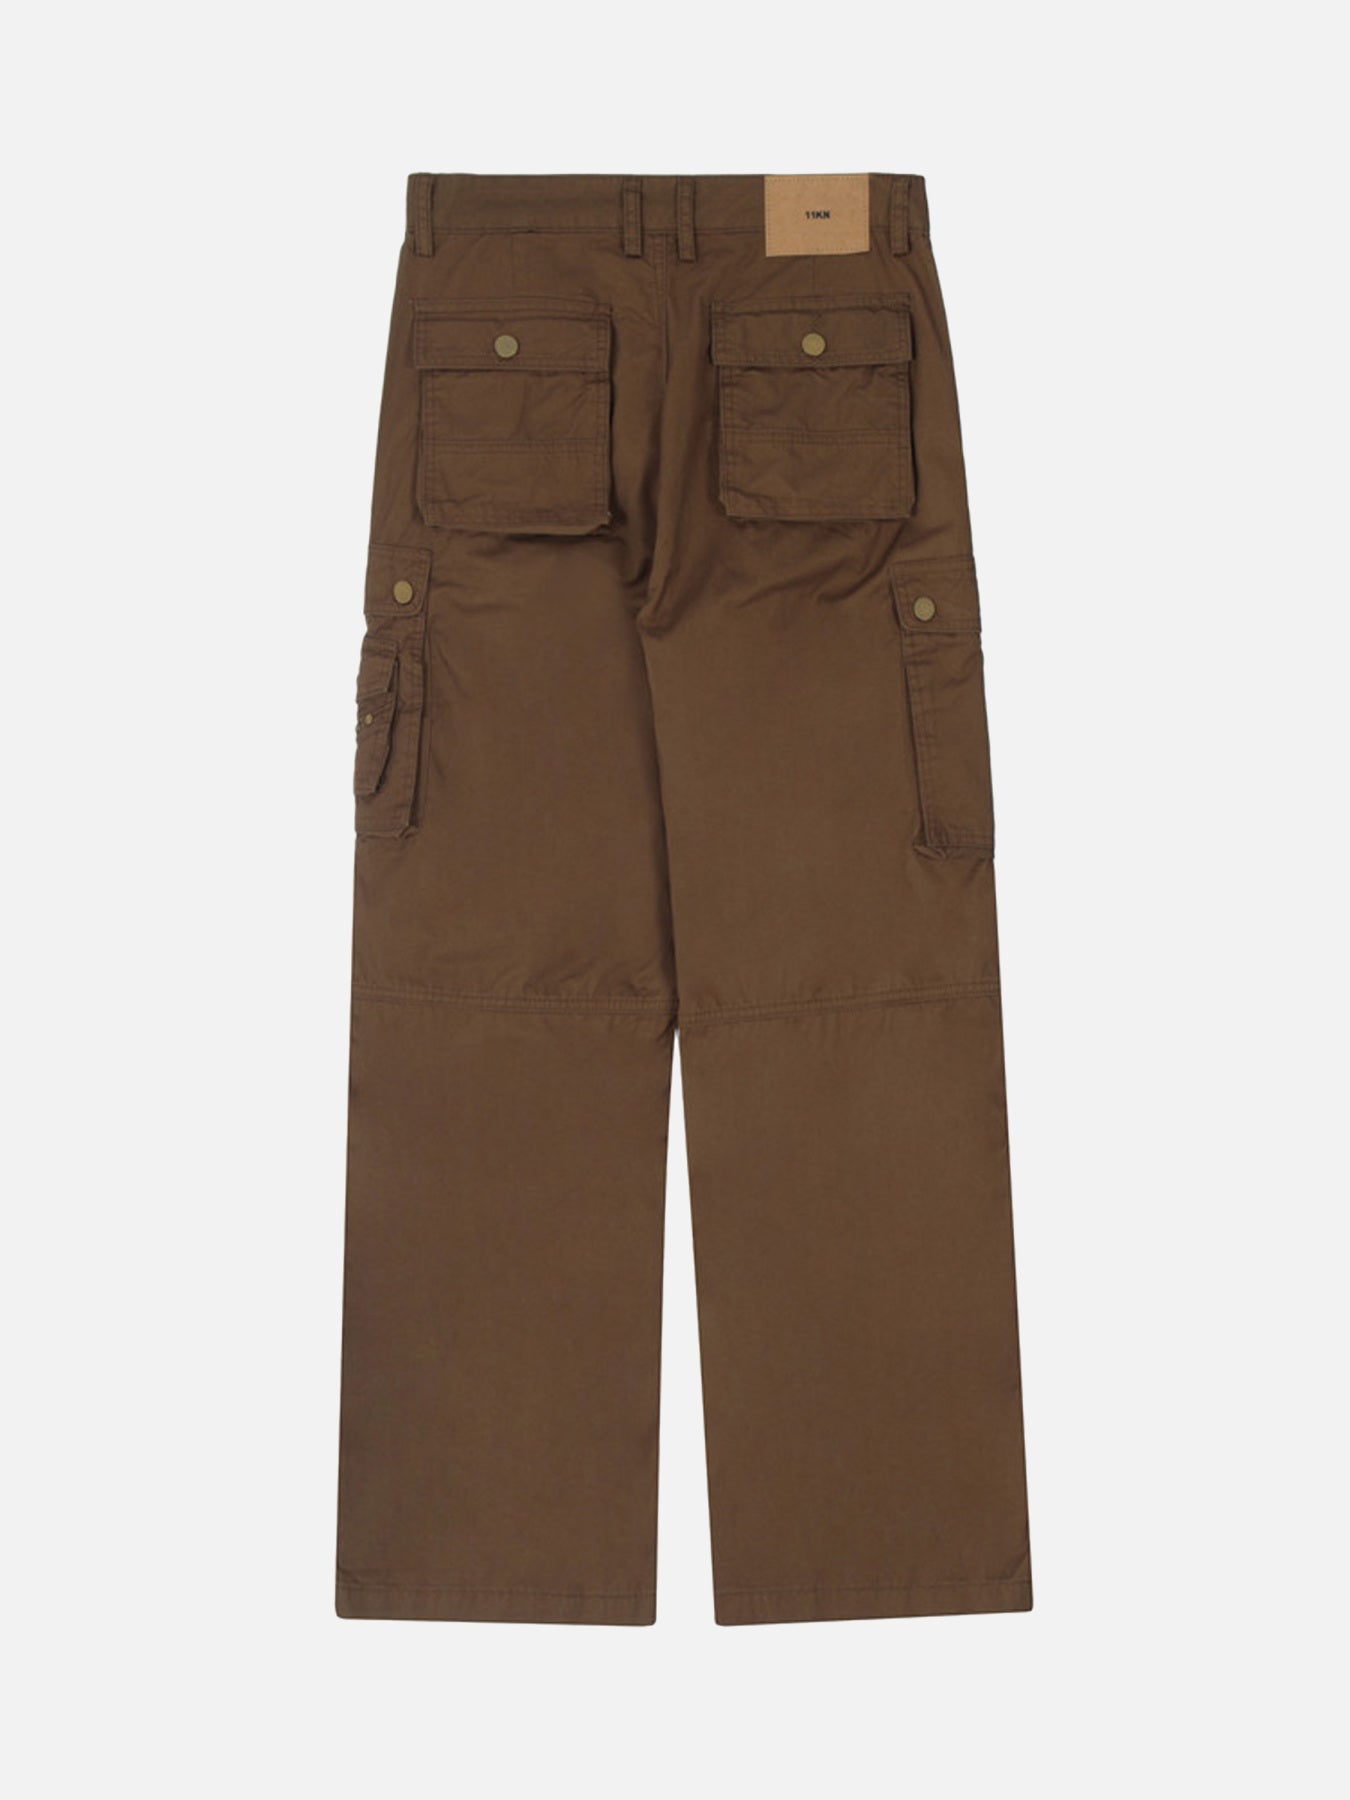 The Supermade Multi-pocket Work Pants